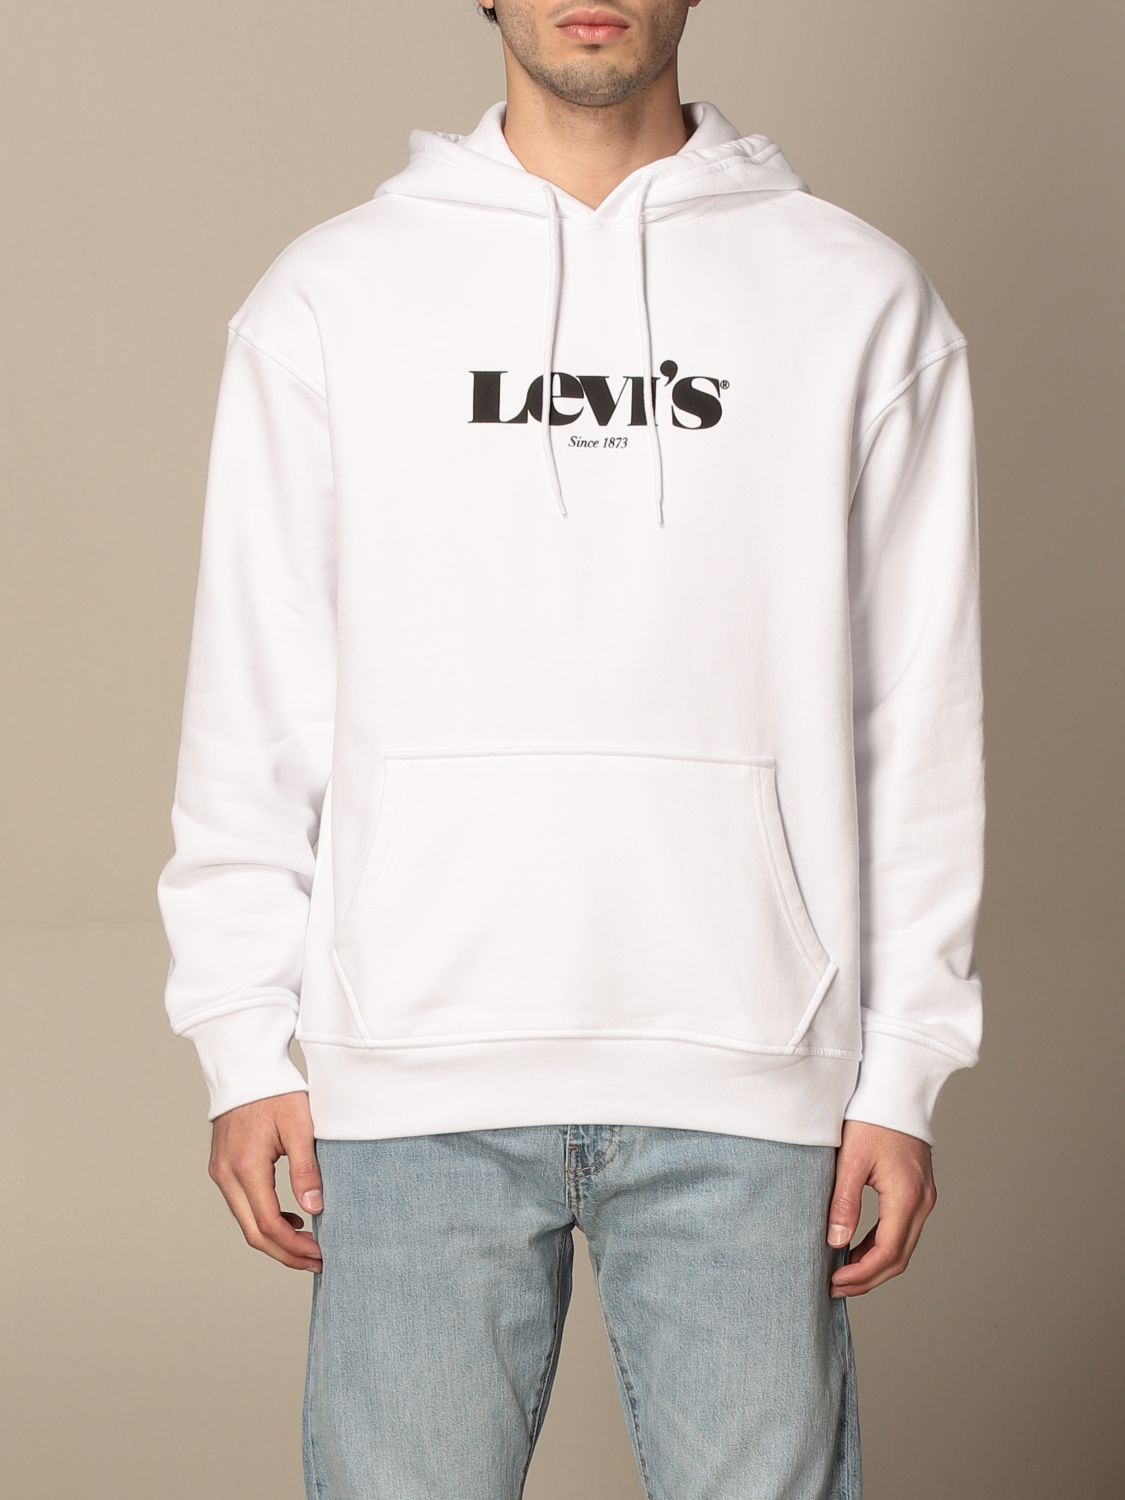 levis sweatshirt white